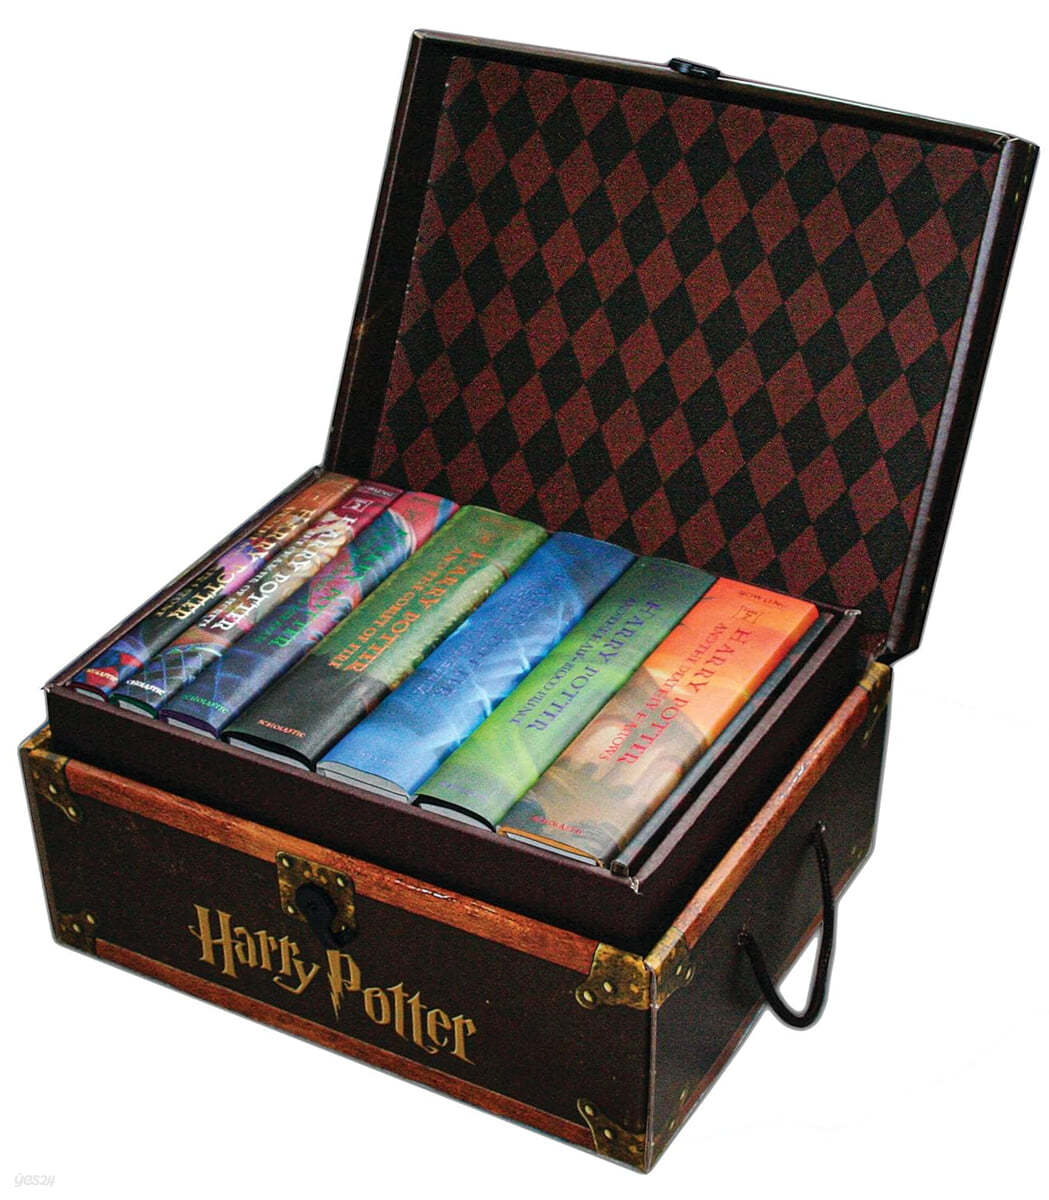 Harry Potter Hardcover Boxed Set: Books 1-7 해리포터 원서 하드커버 7권 박스 세트 (미국판)